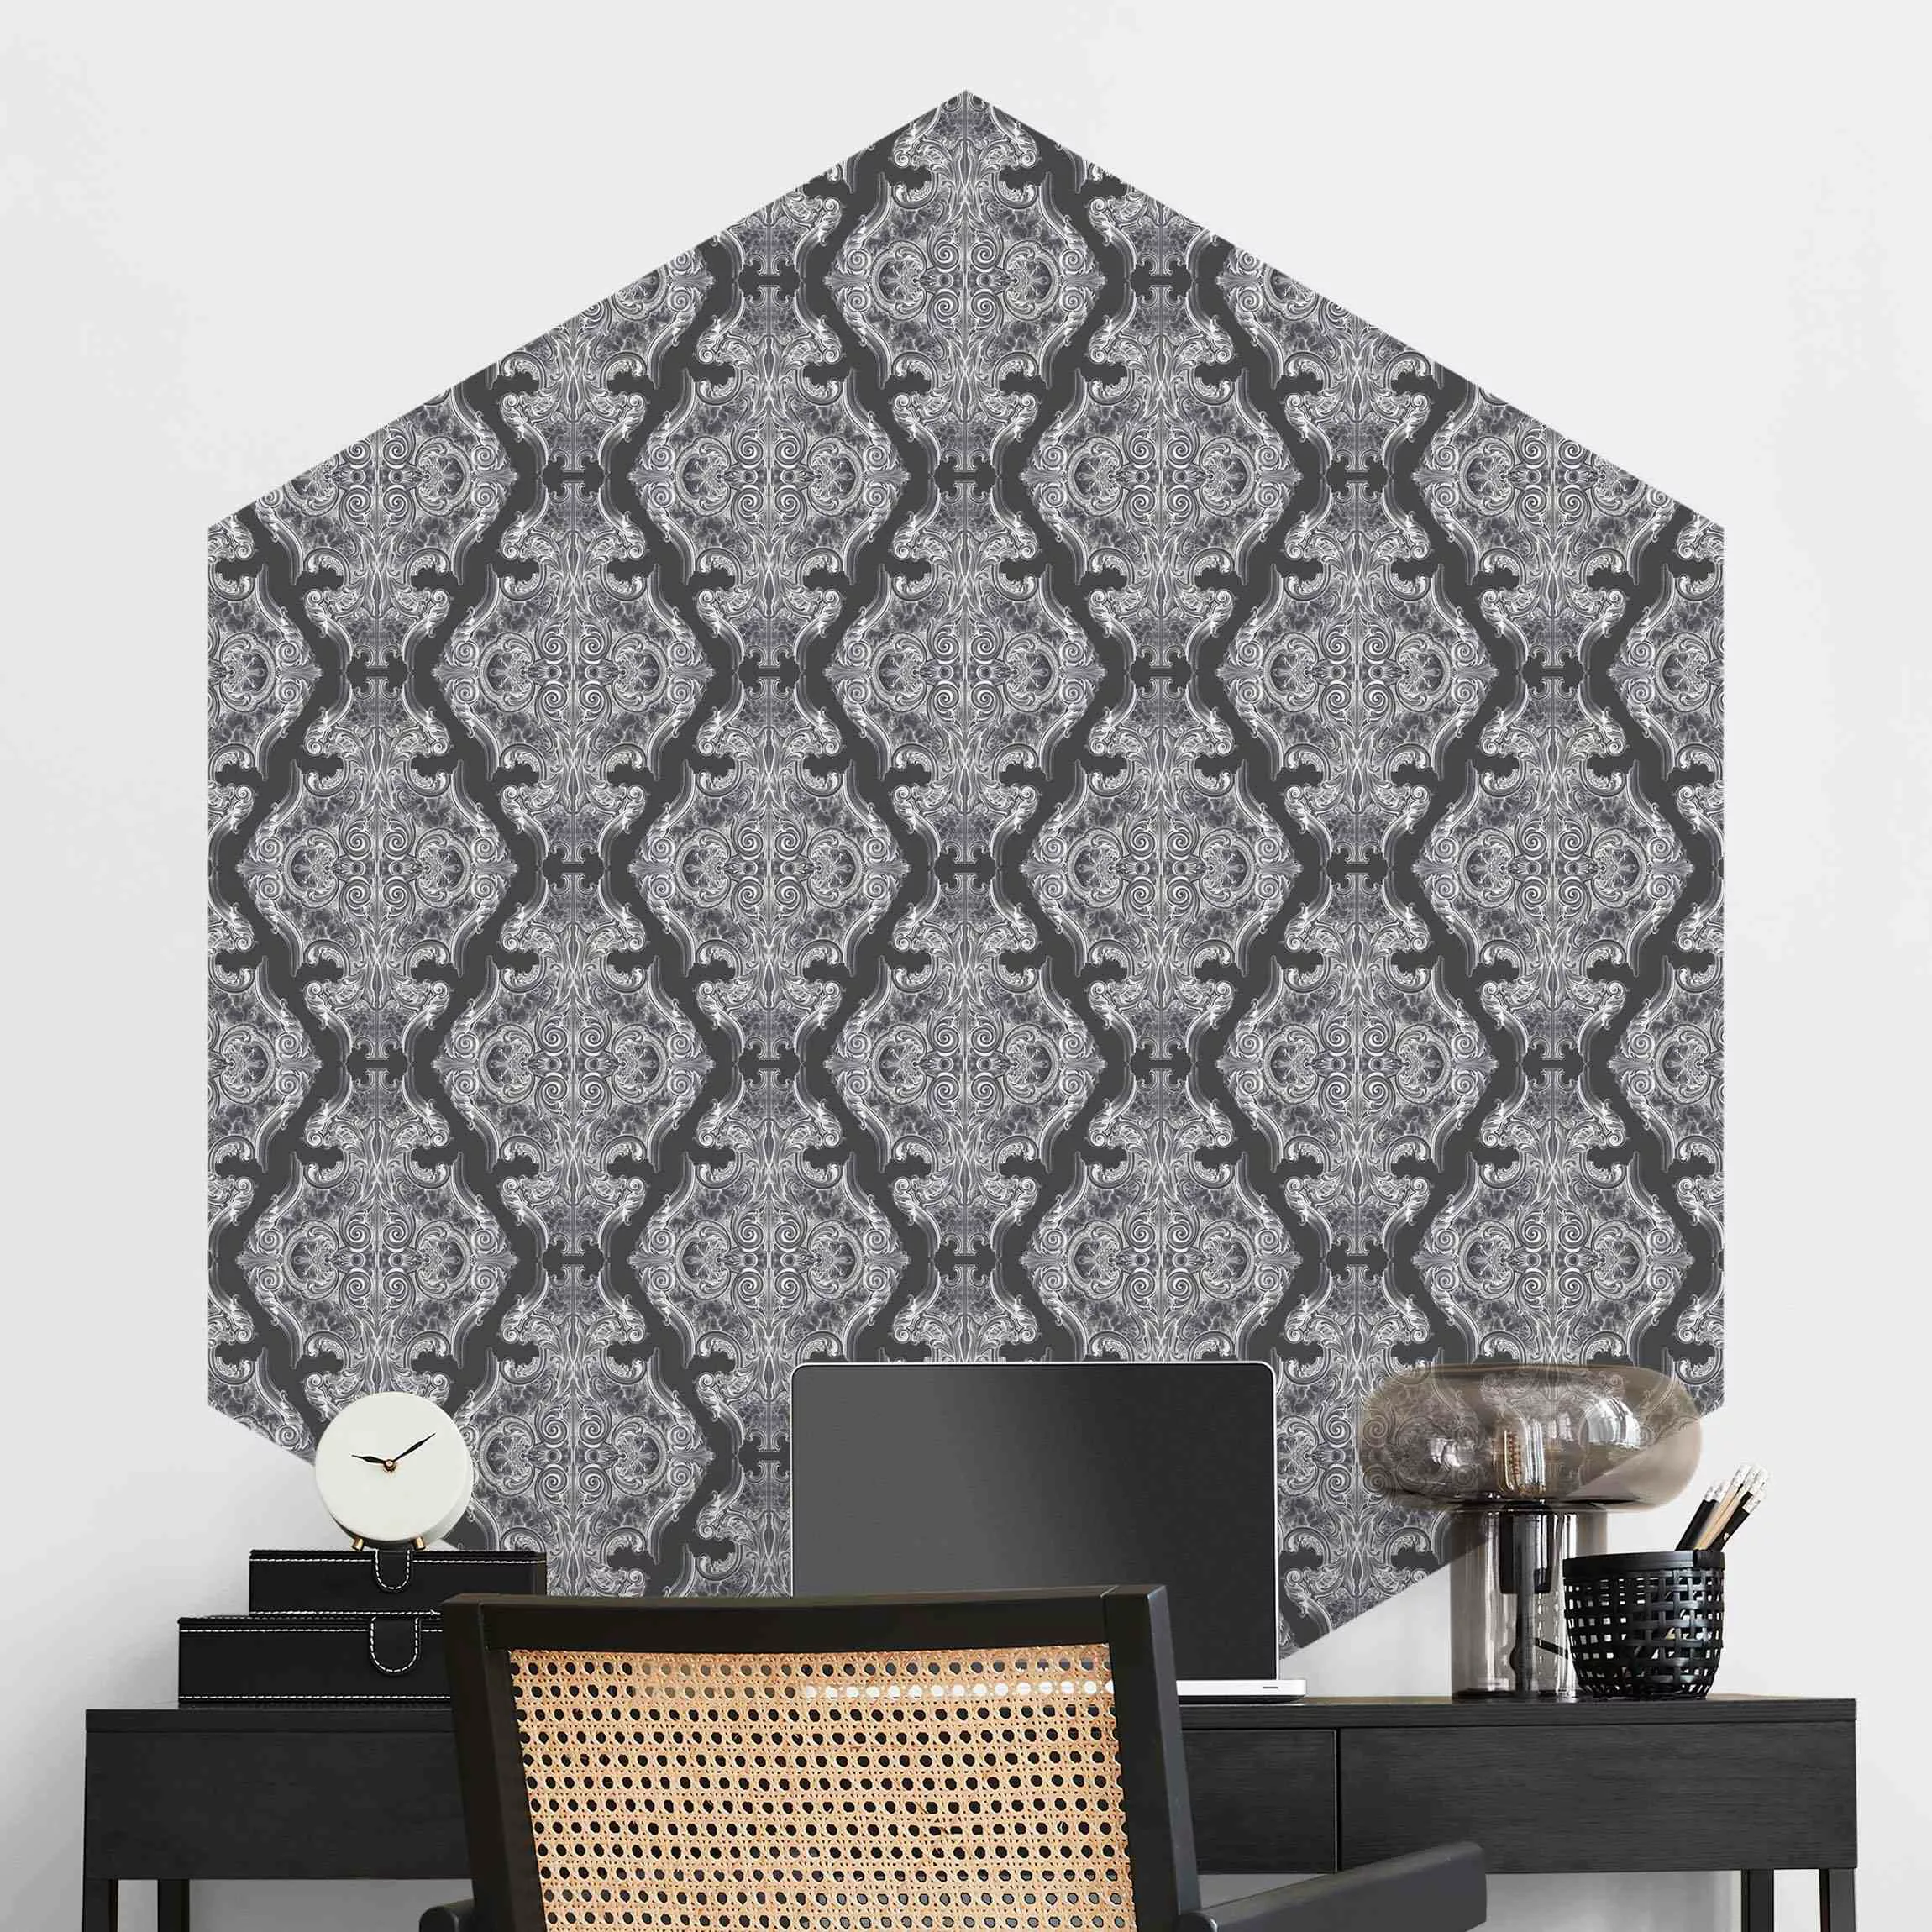 Hexagon Mustertapete selbstklebend Aquarell Barock Muster vor Dunkelgrau günstig online kaufen